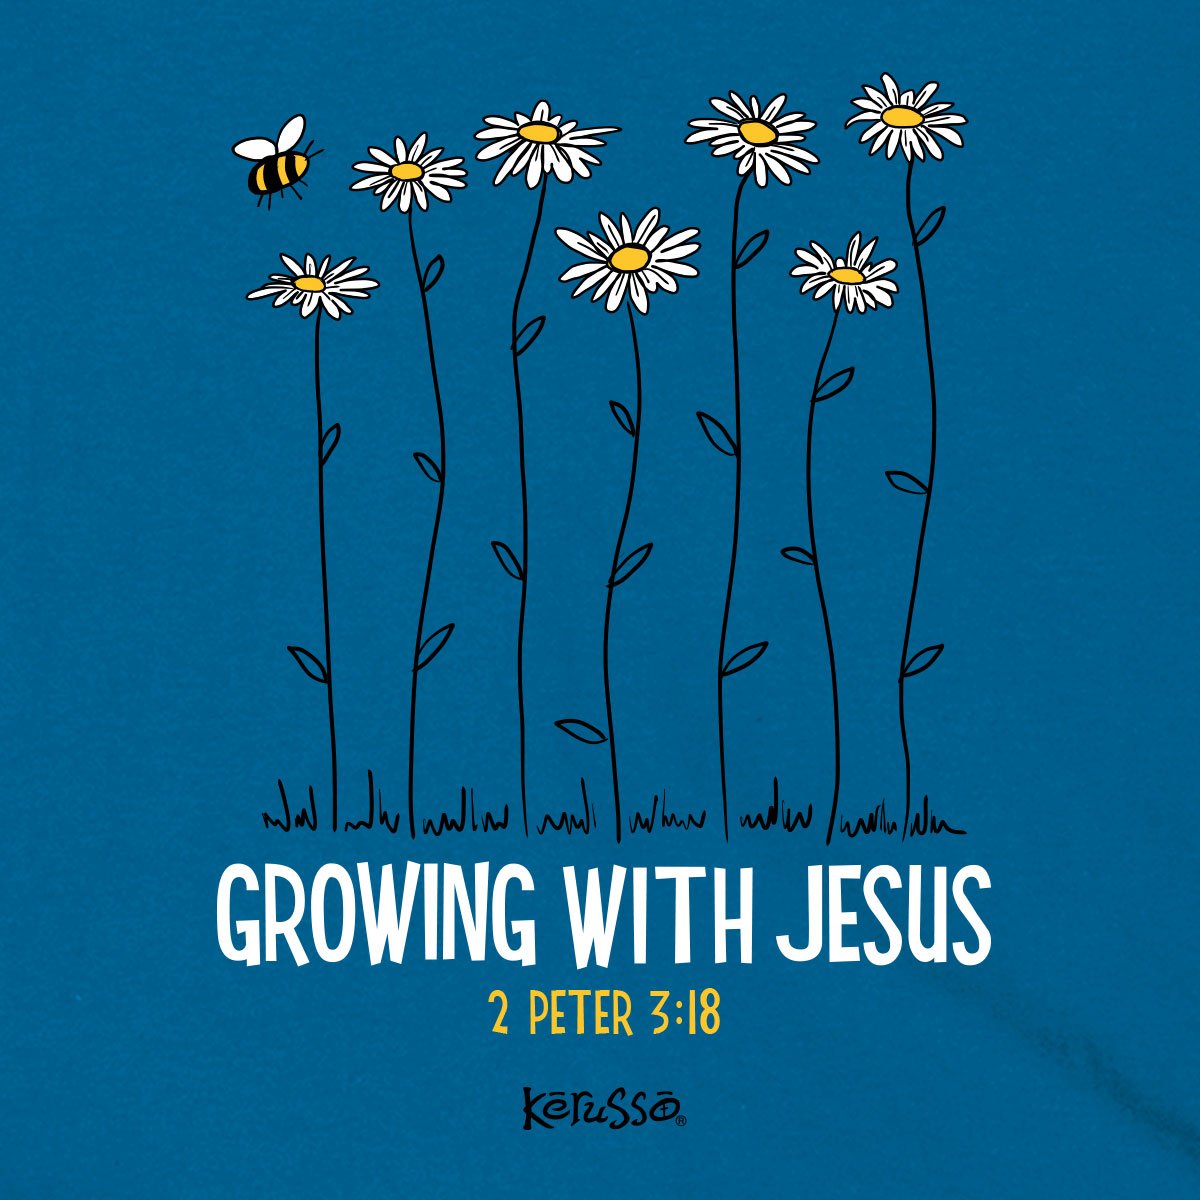 Kerusso Kids T-Shirt Growing With Jesus | 2FruitBearers